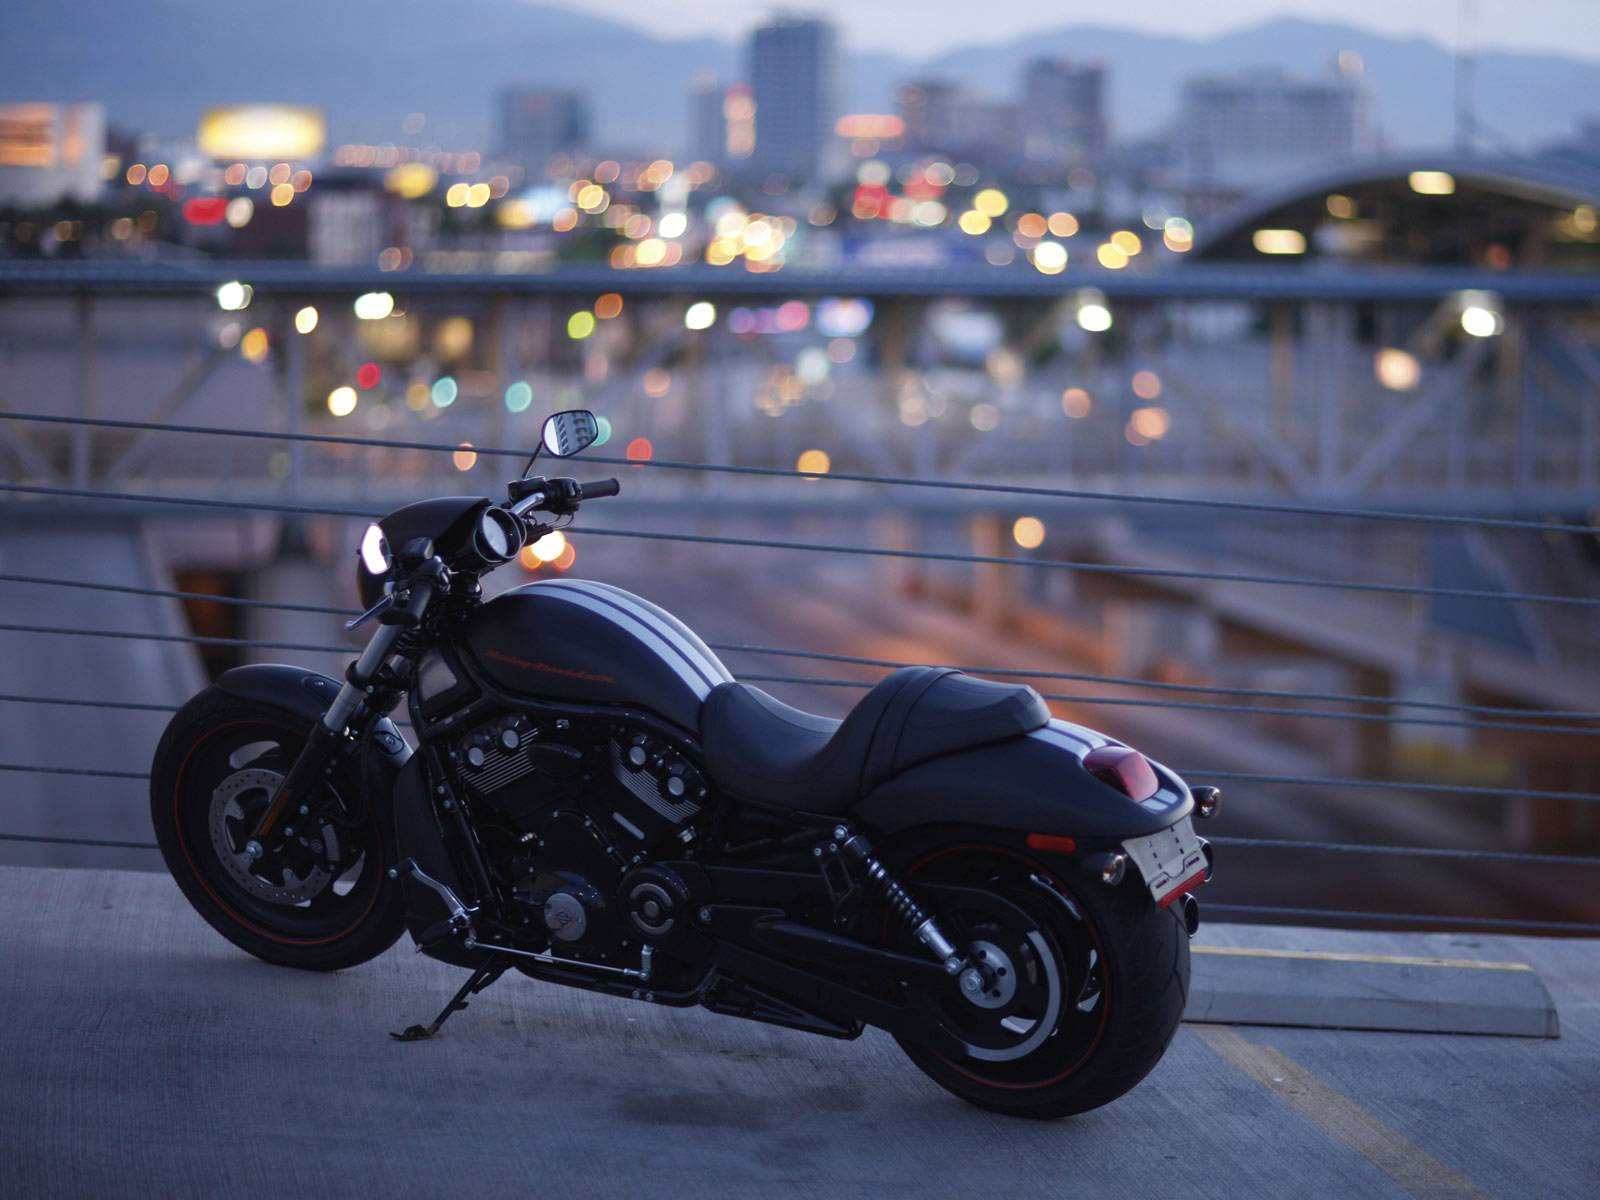 Harley Davidson In Blurred Background Wallpaper